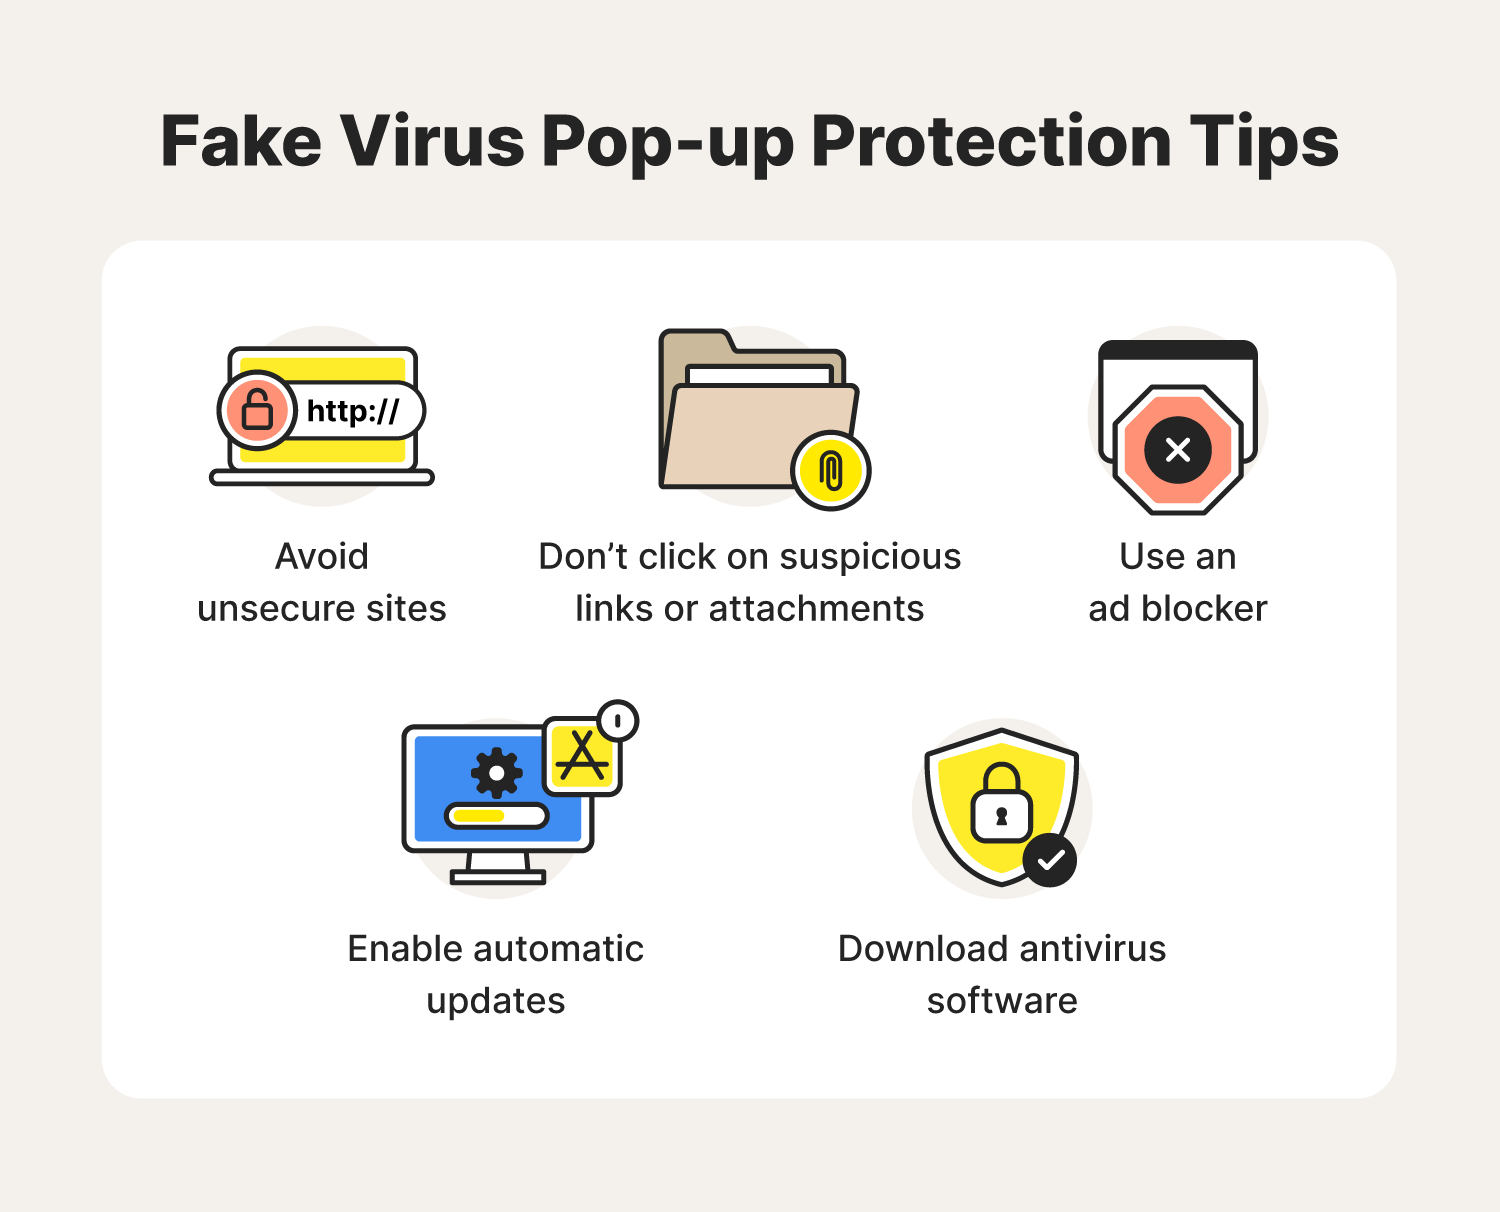 Thriller galerij Hoes How to remove a fake virus alert - Norton